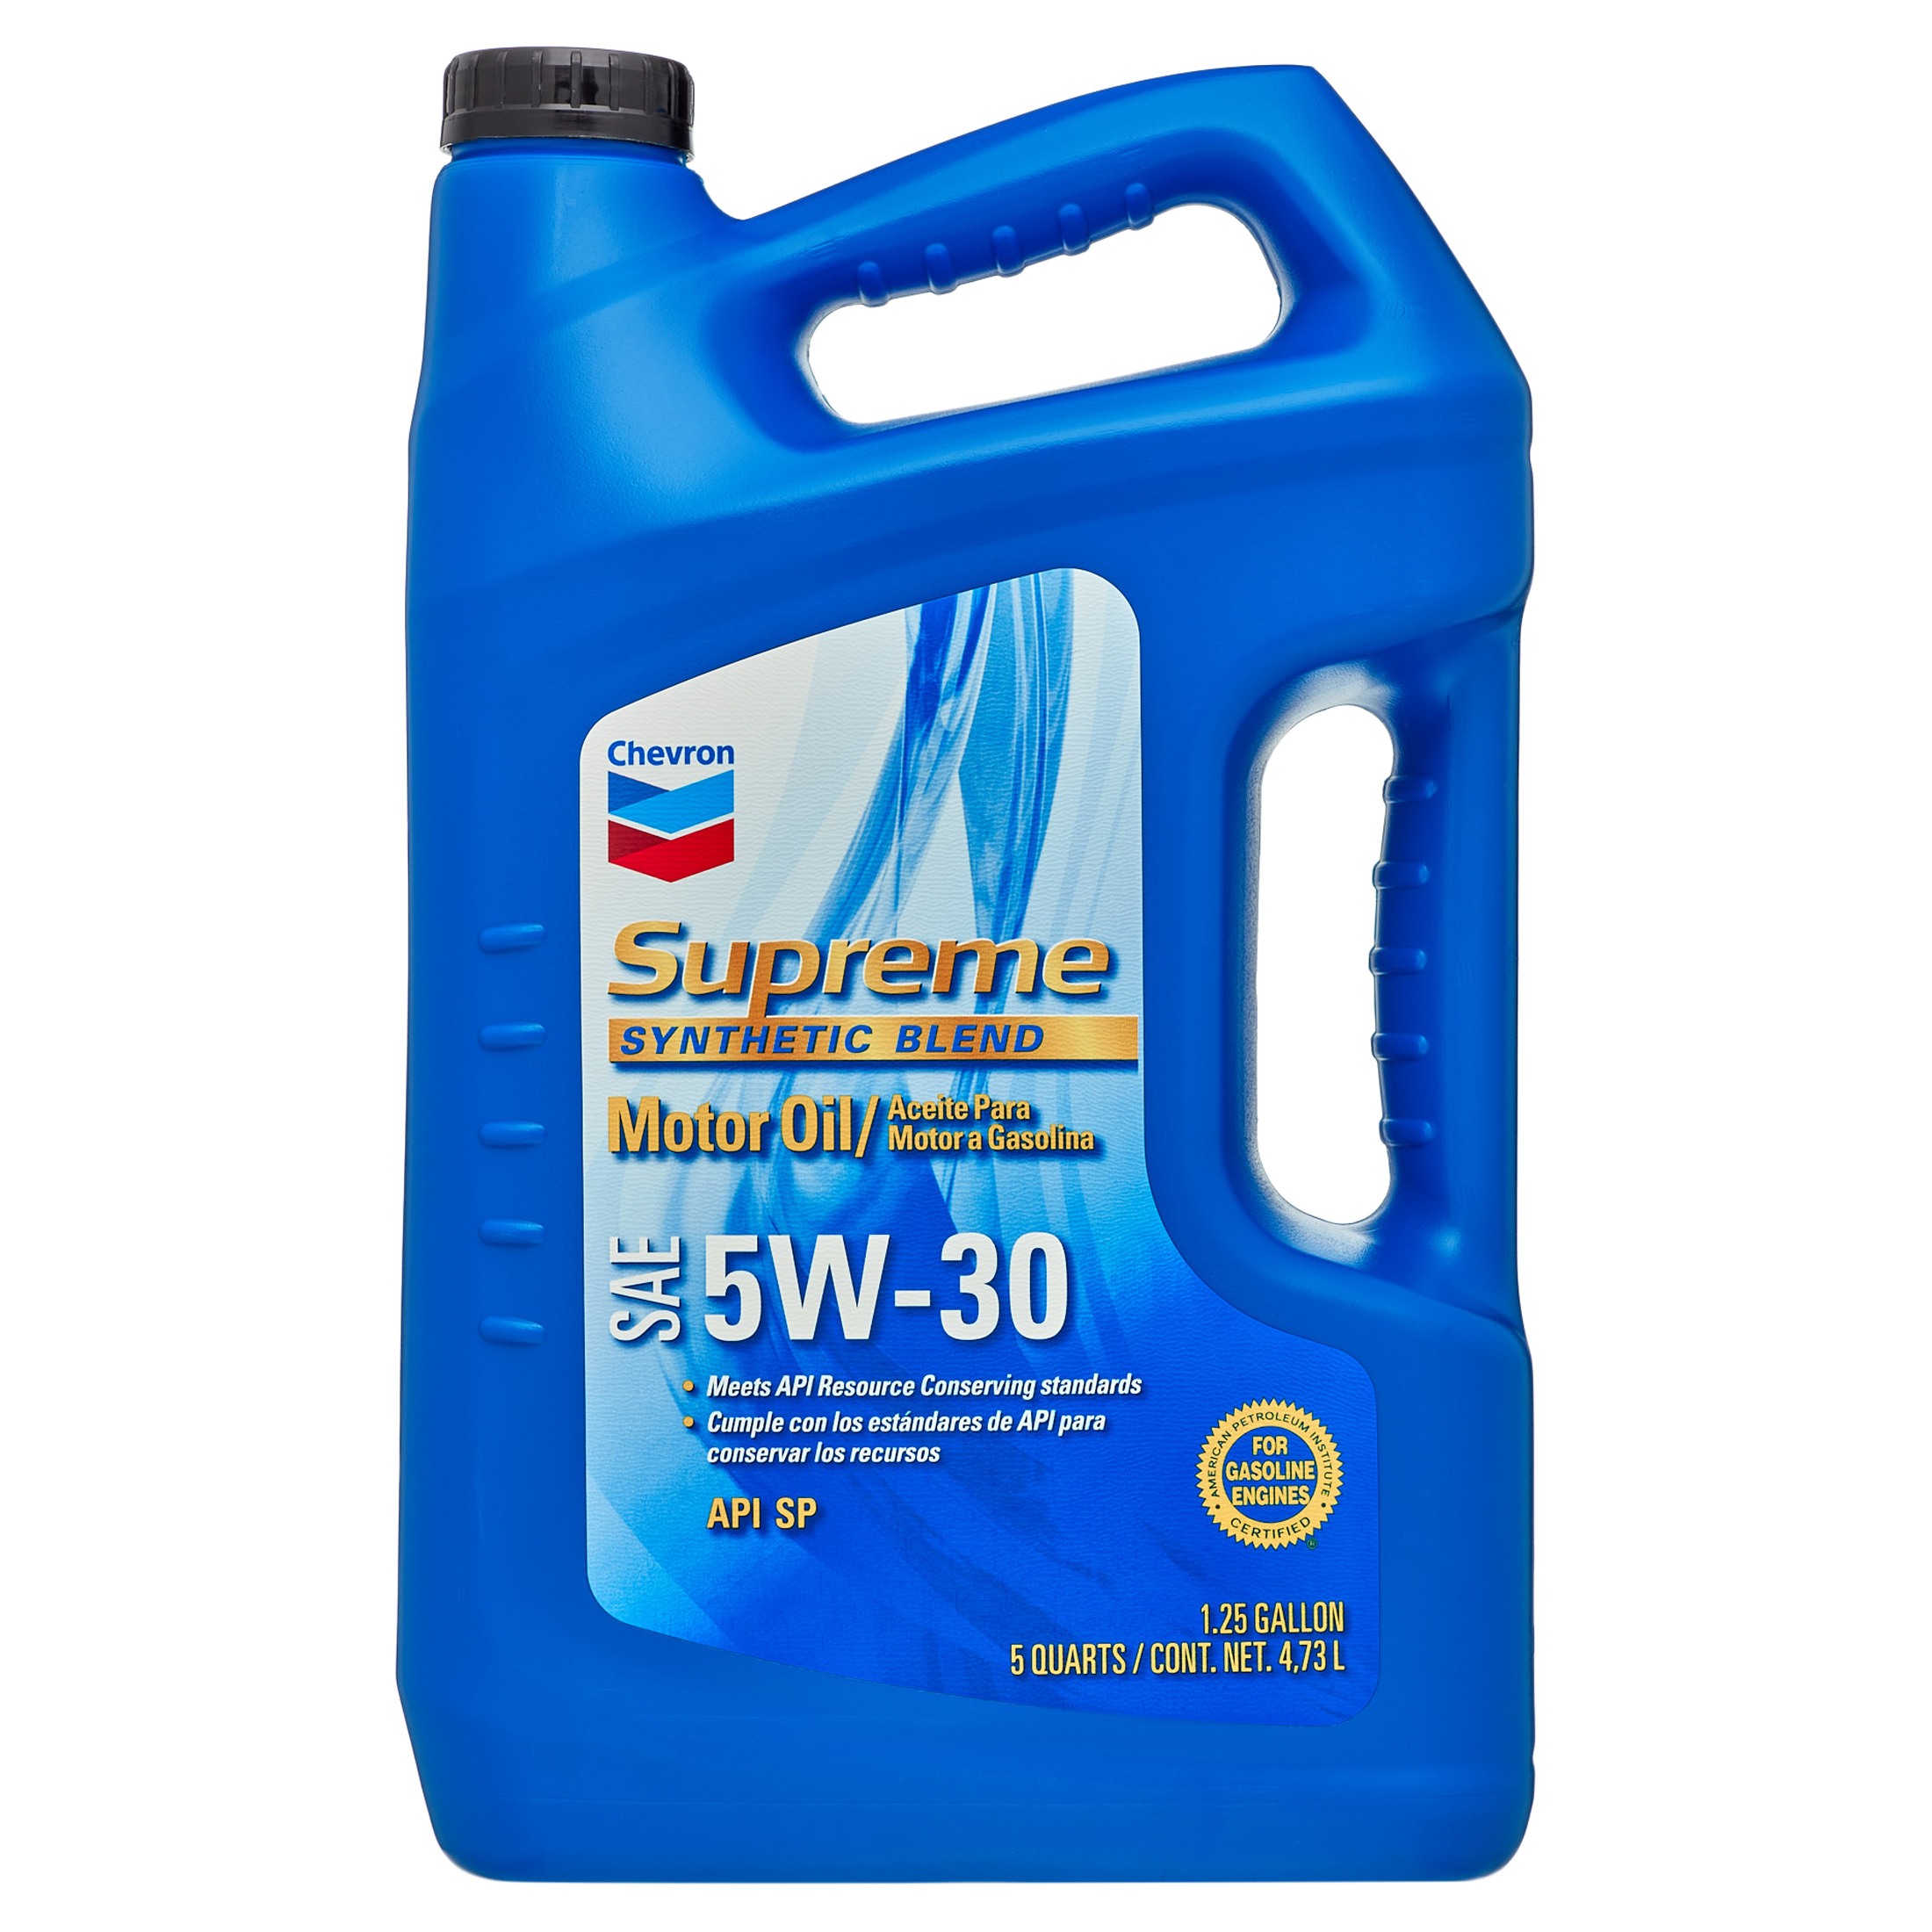 Chevron Supreme Synthetic Blend Motor Oil 5W30 5 Quart Walmart